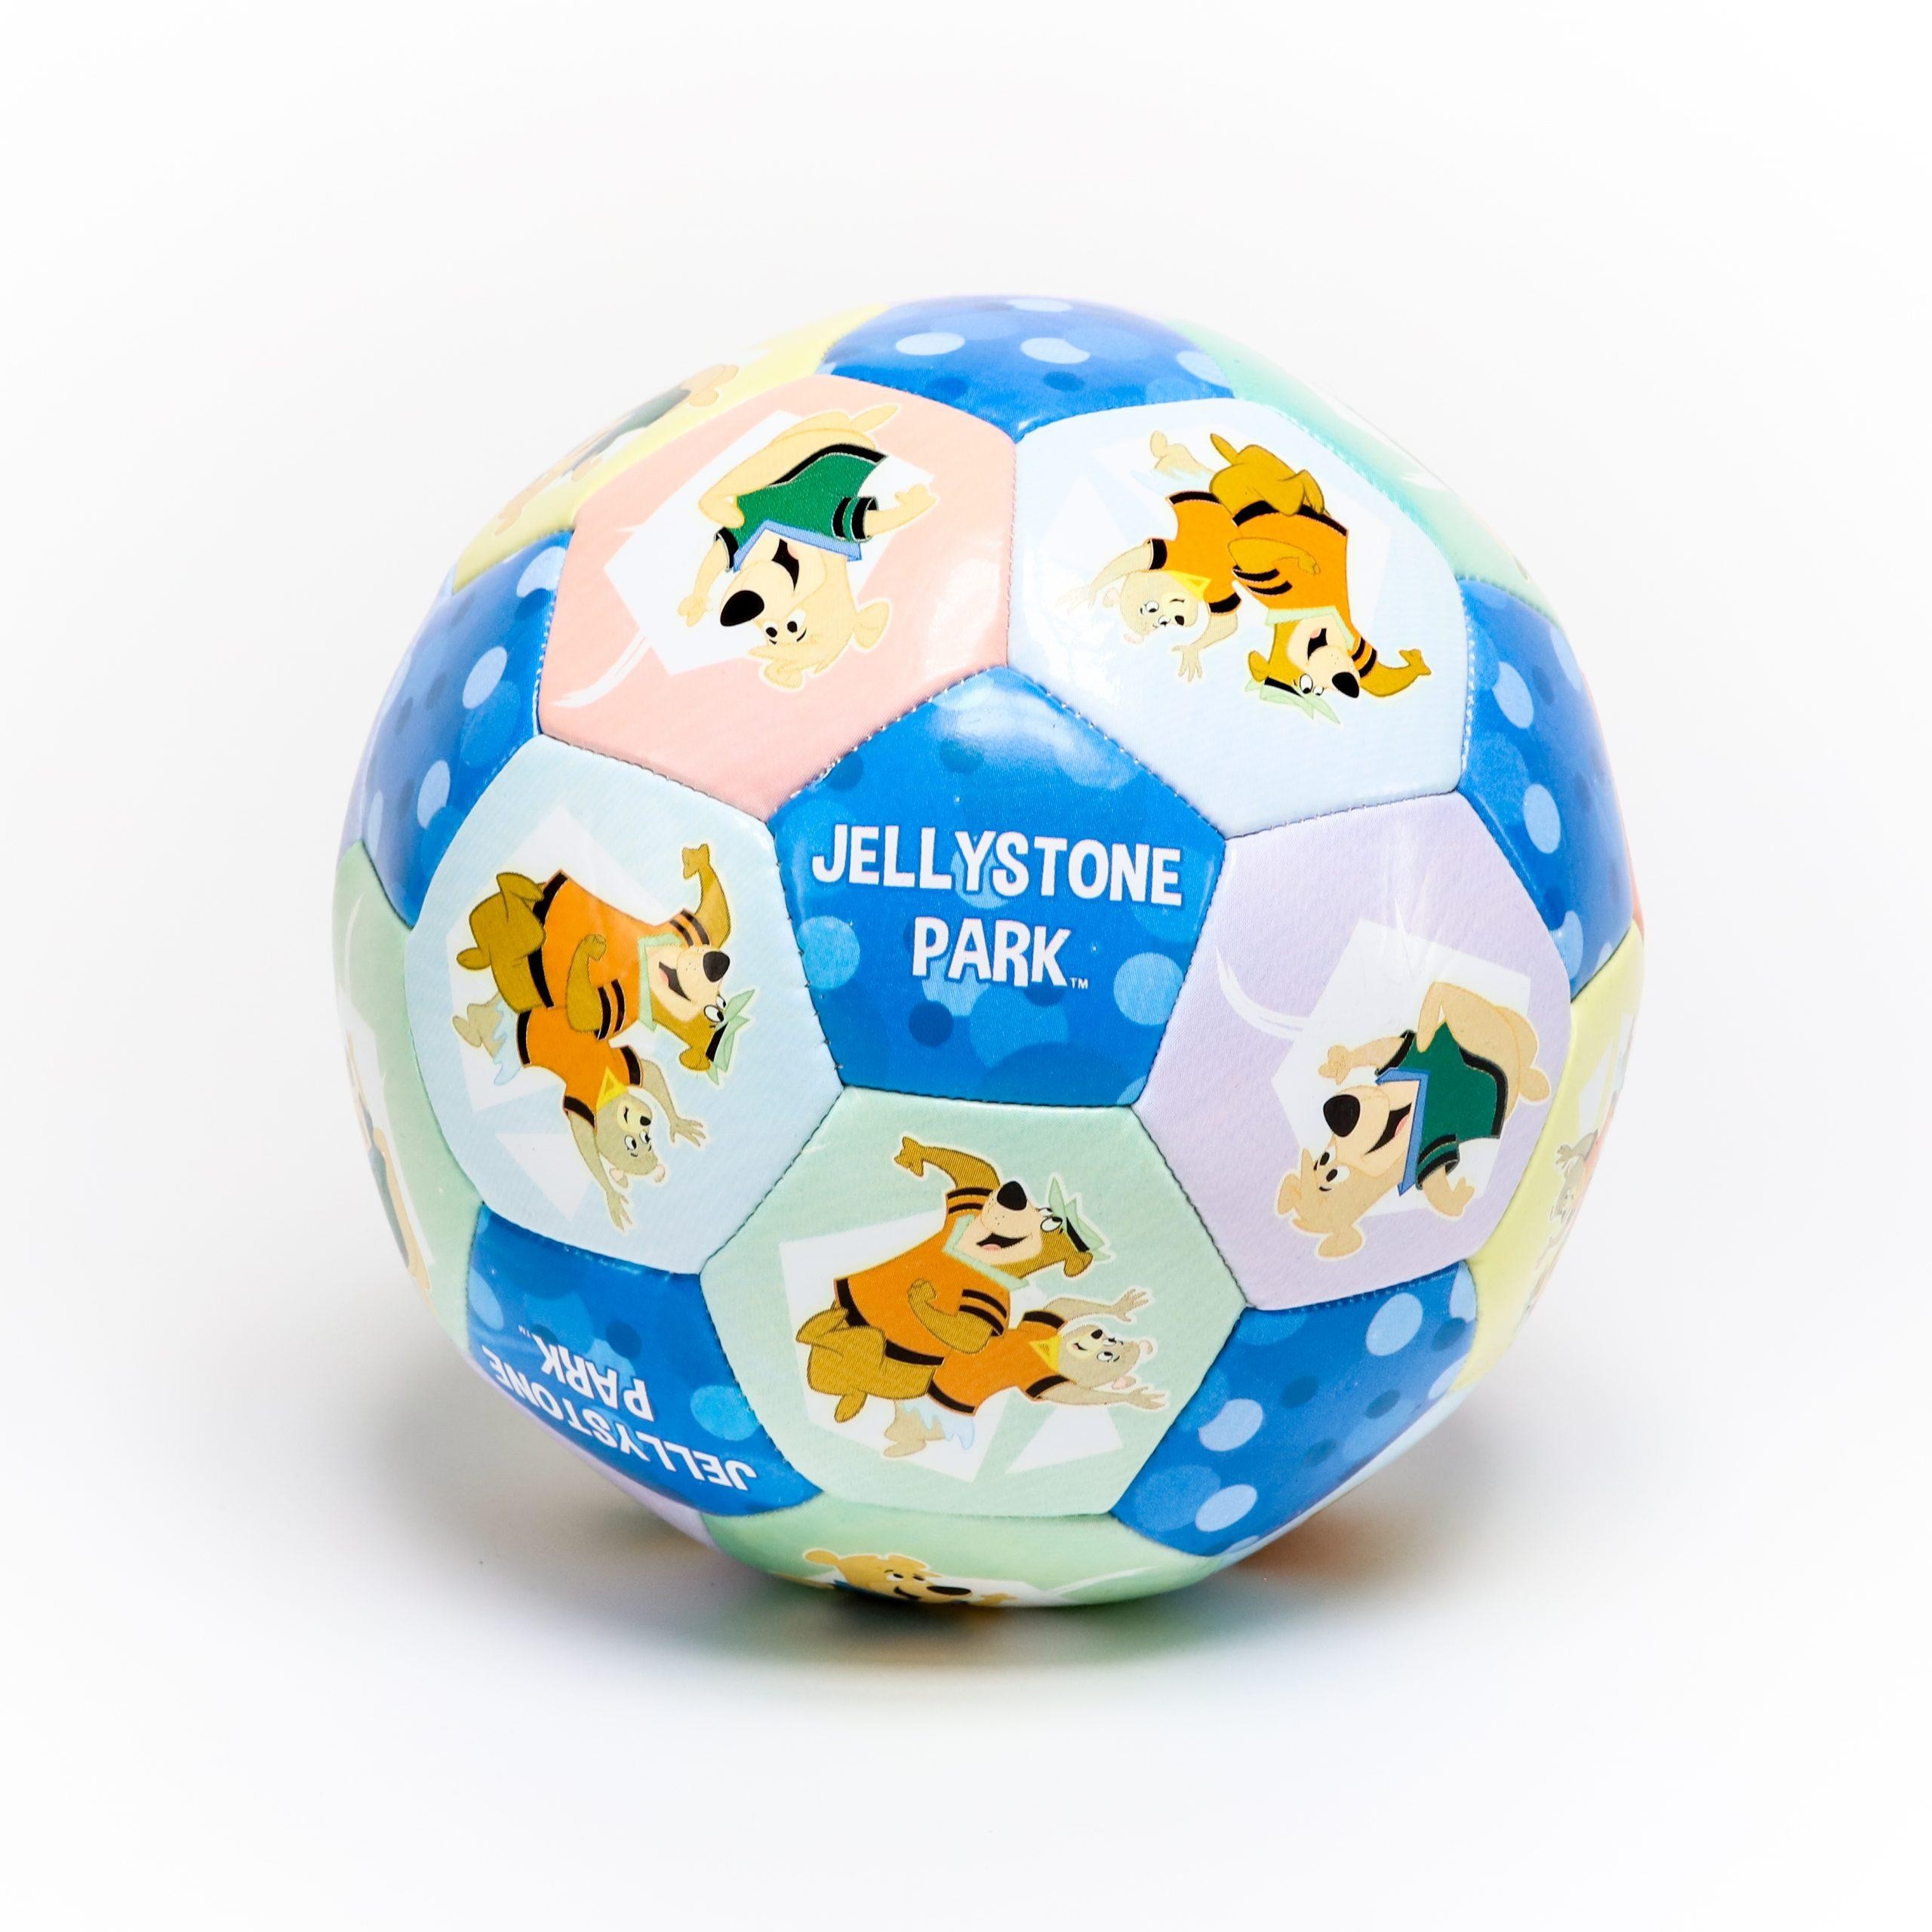 Jellystone Park Character Soccer Ball